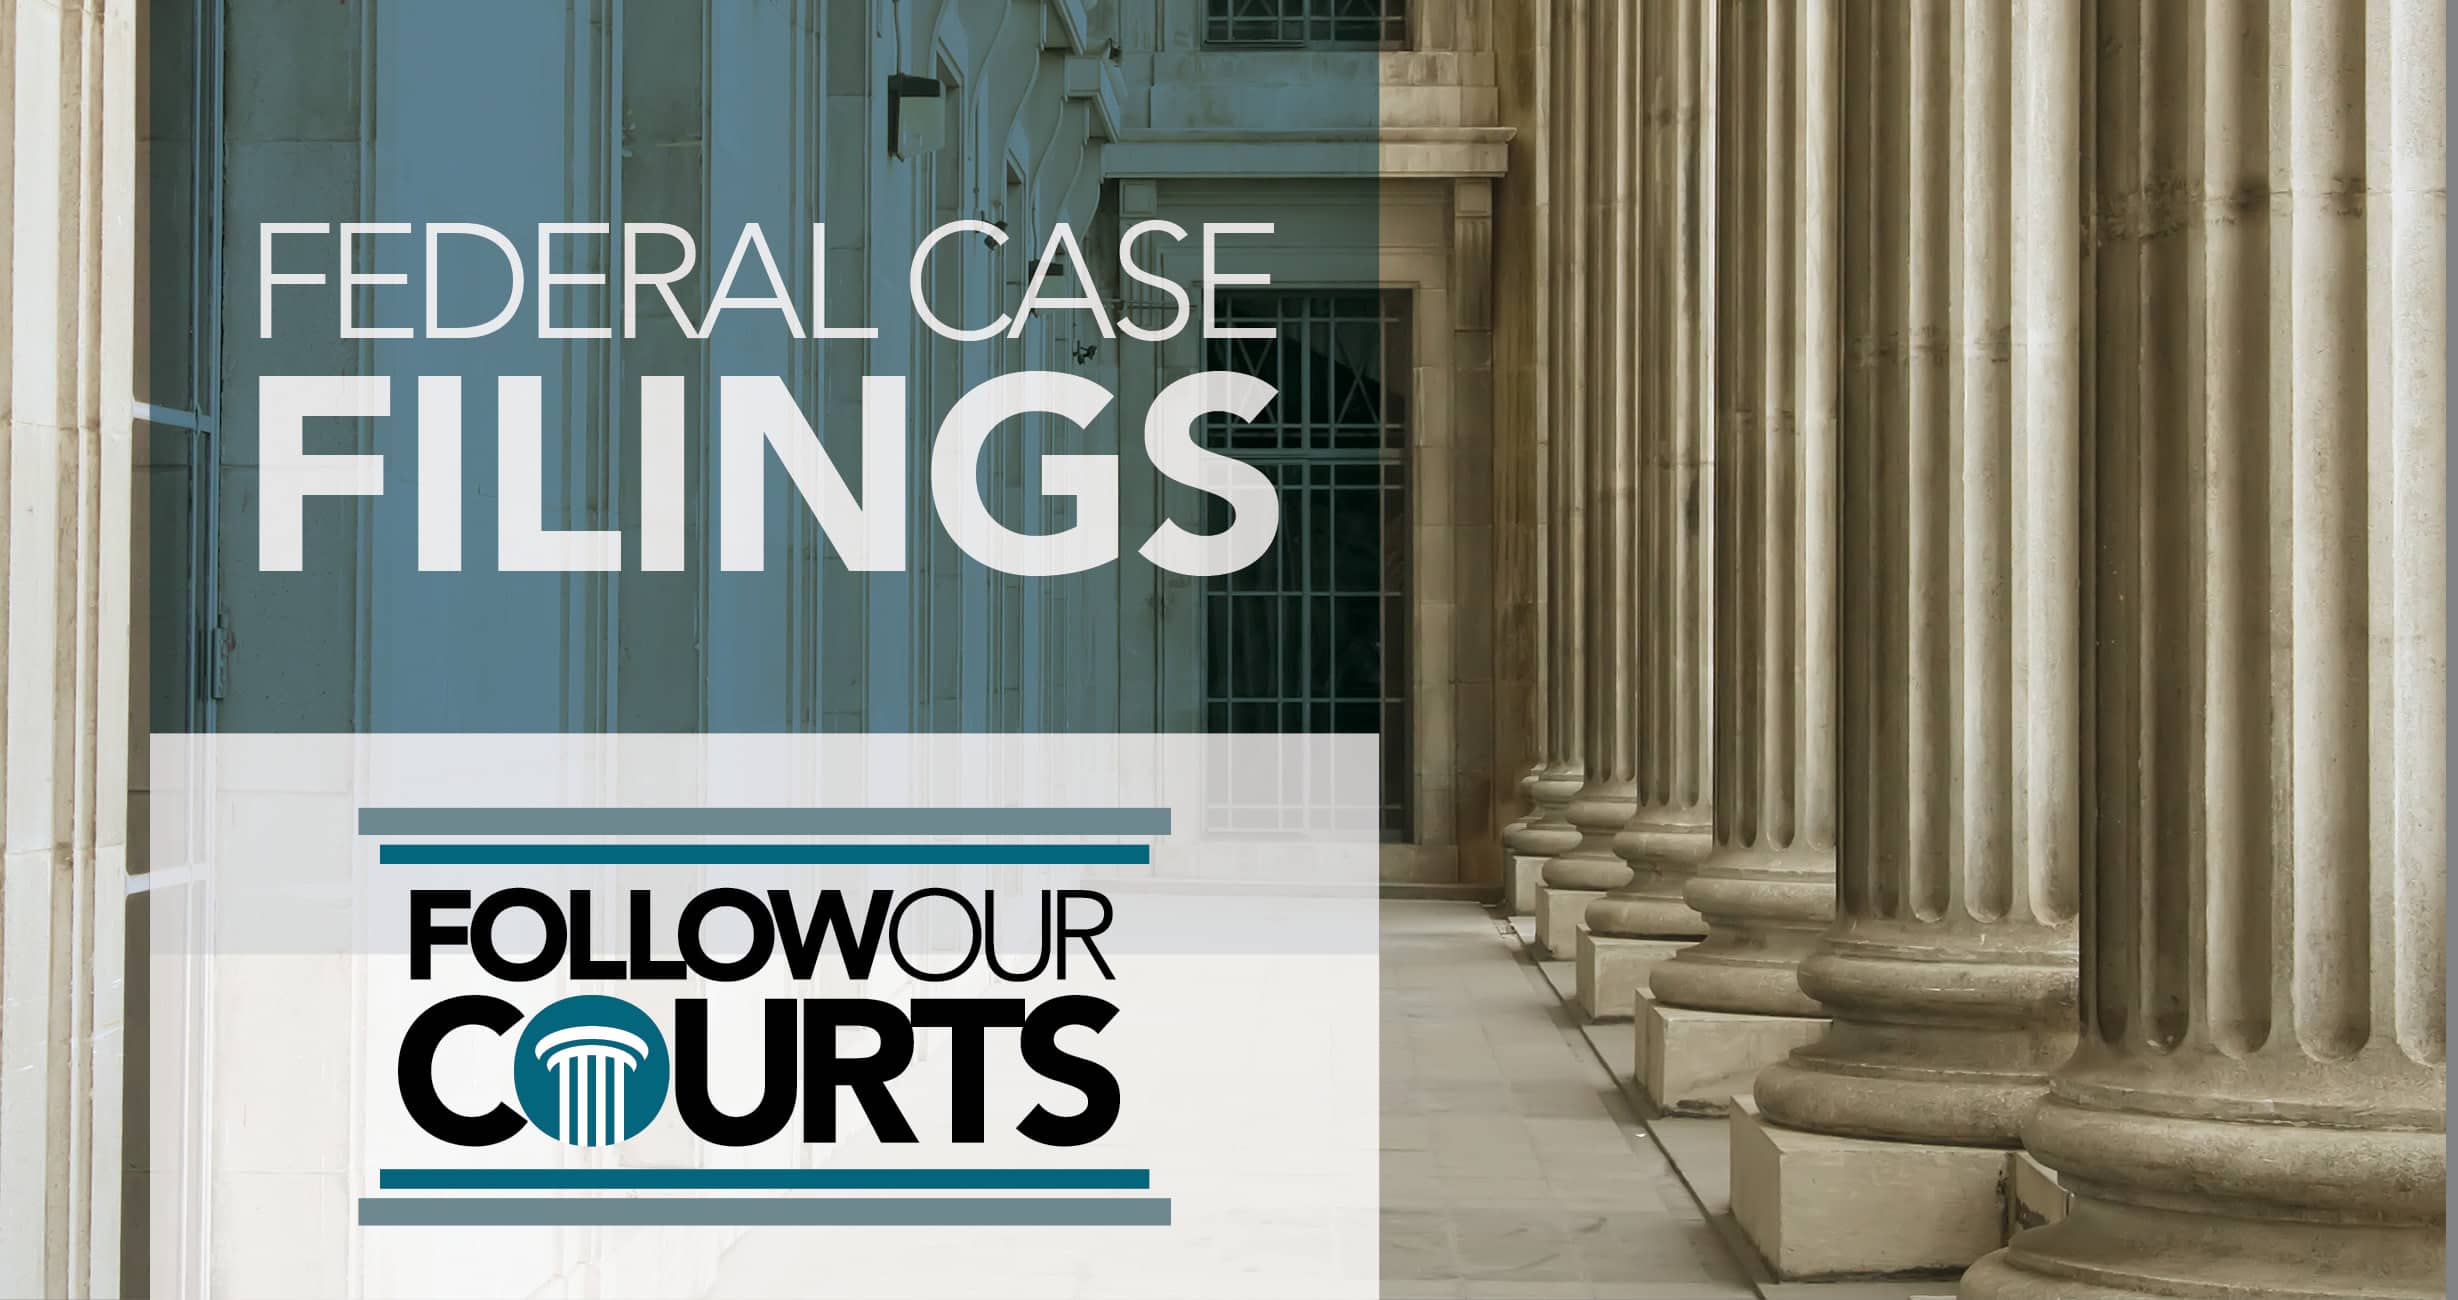 Federal case filings May 6